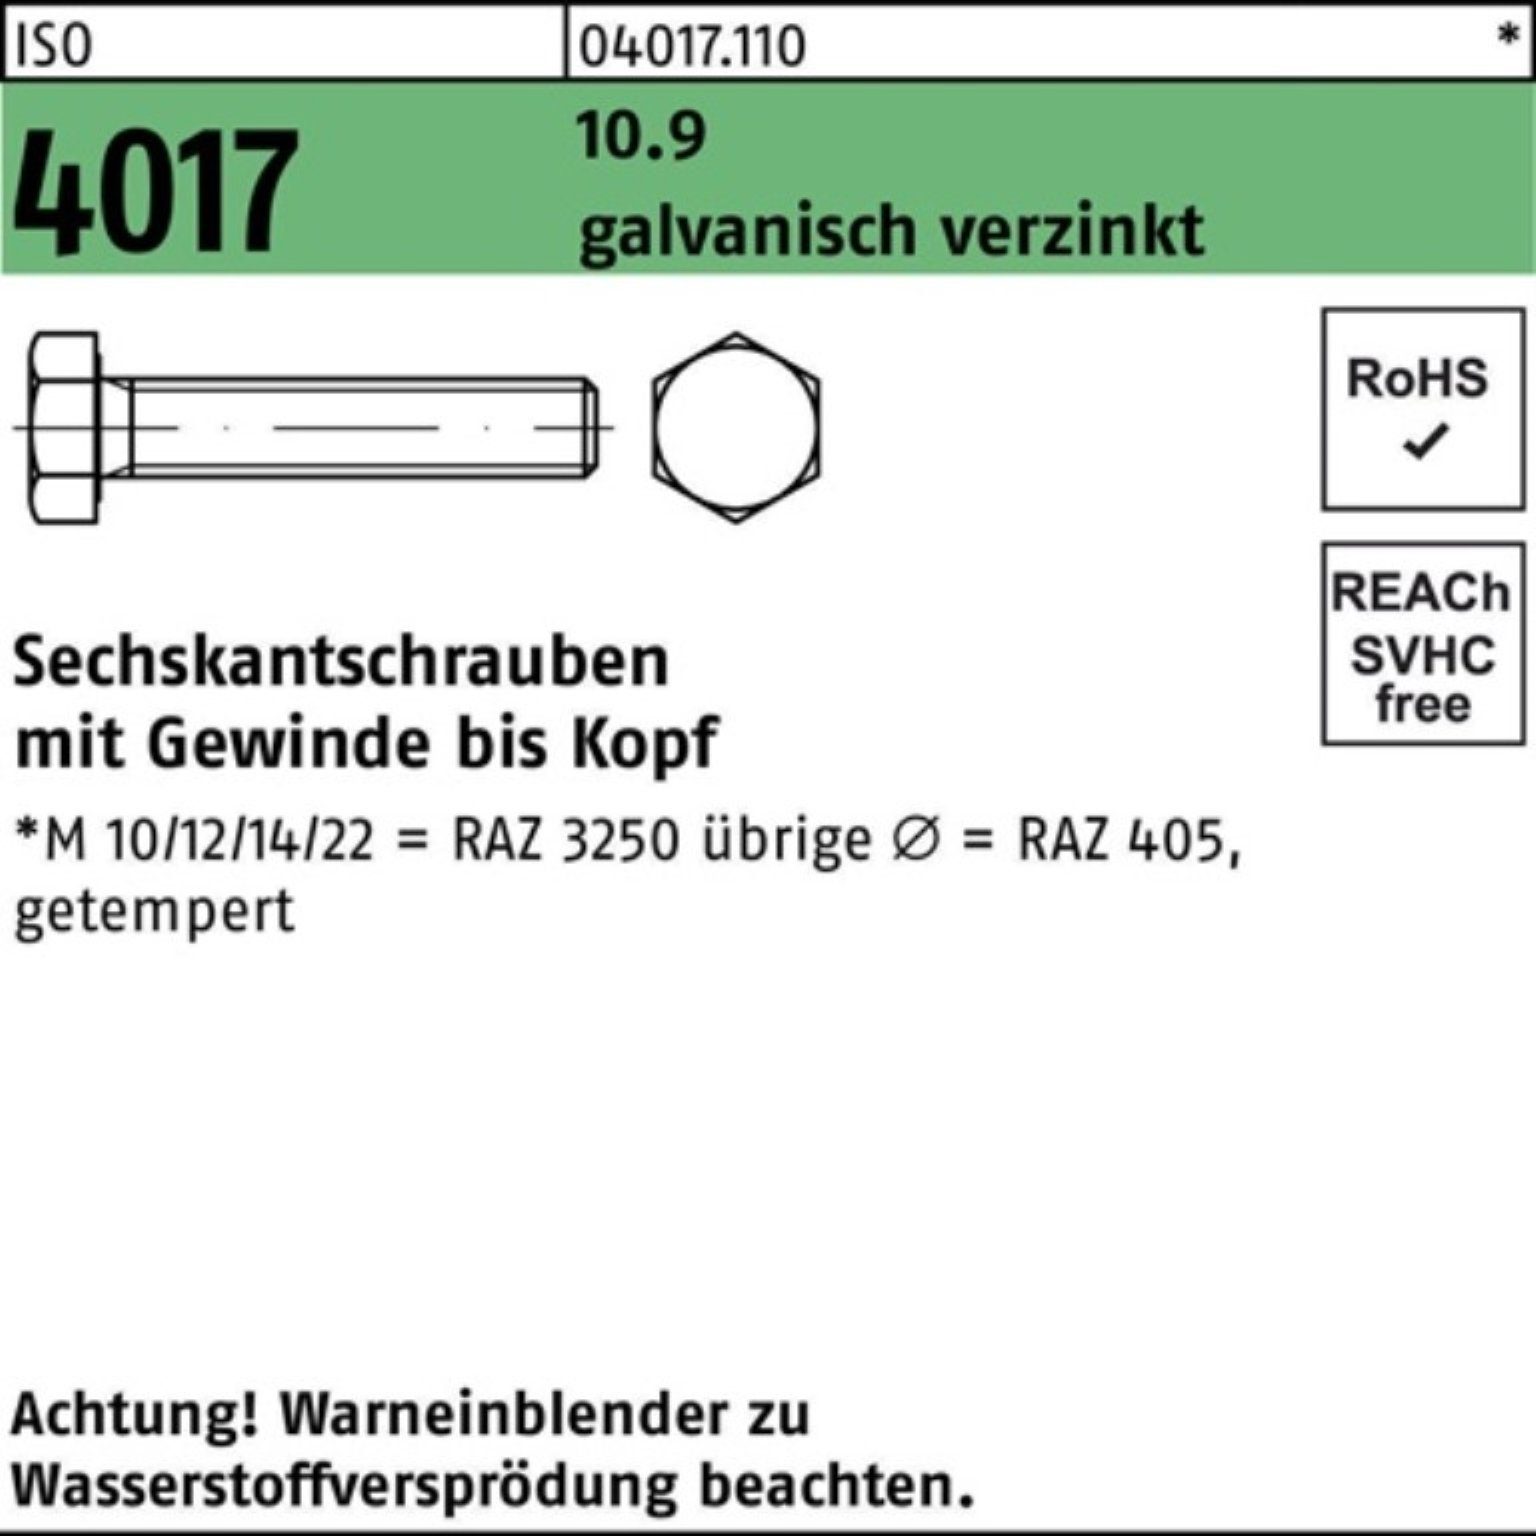 Bufab Sechskantschraube 100er galv.verz. 150 ISO Sechskantschraube 1 10.9 Pack M30x VG St 4017